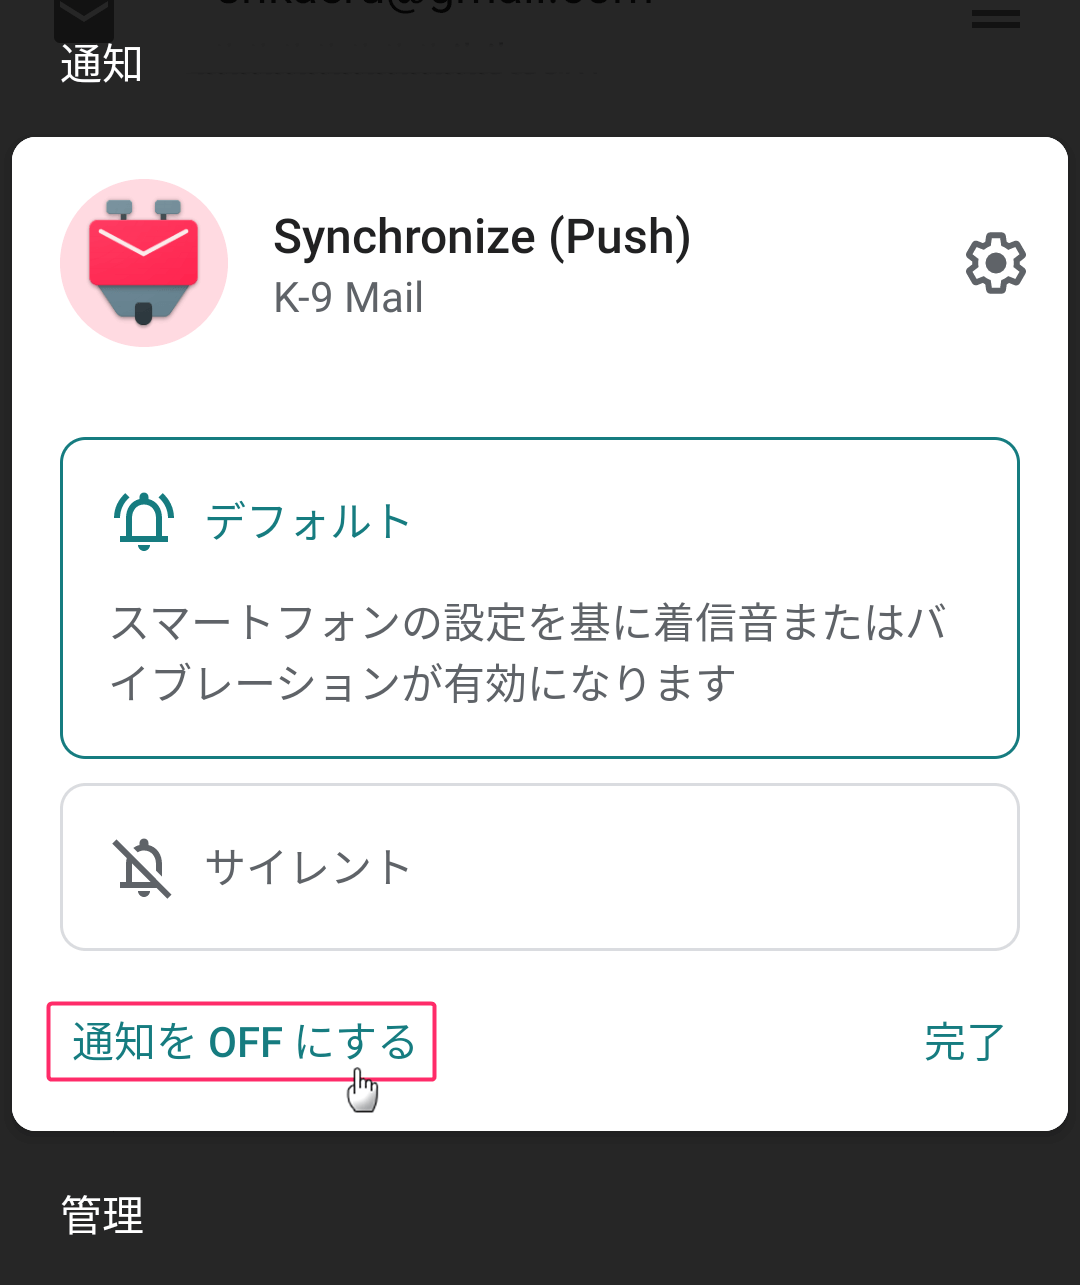 K-9 Mail Synchronize(Push)の通知を消す